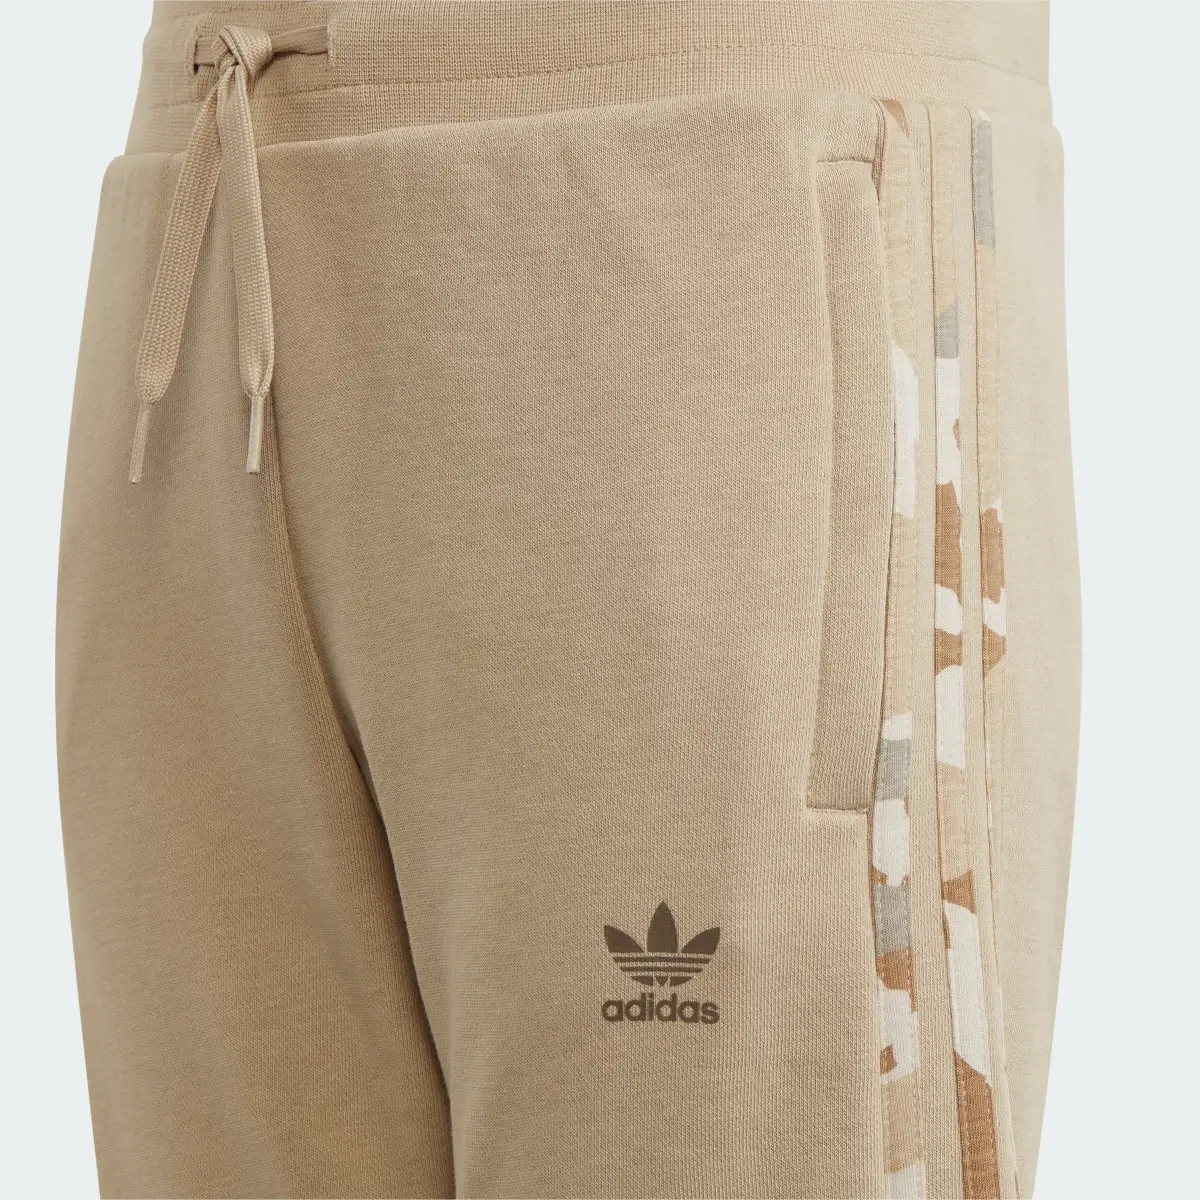 Adidas Camo Shorts. 3